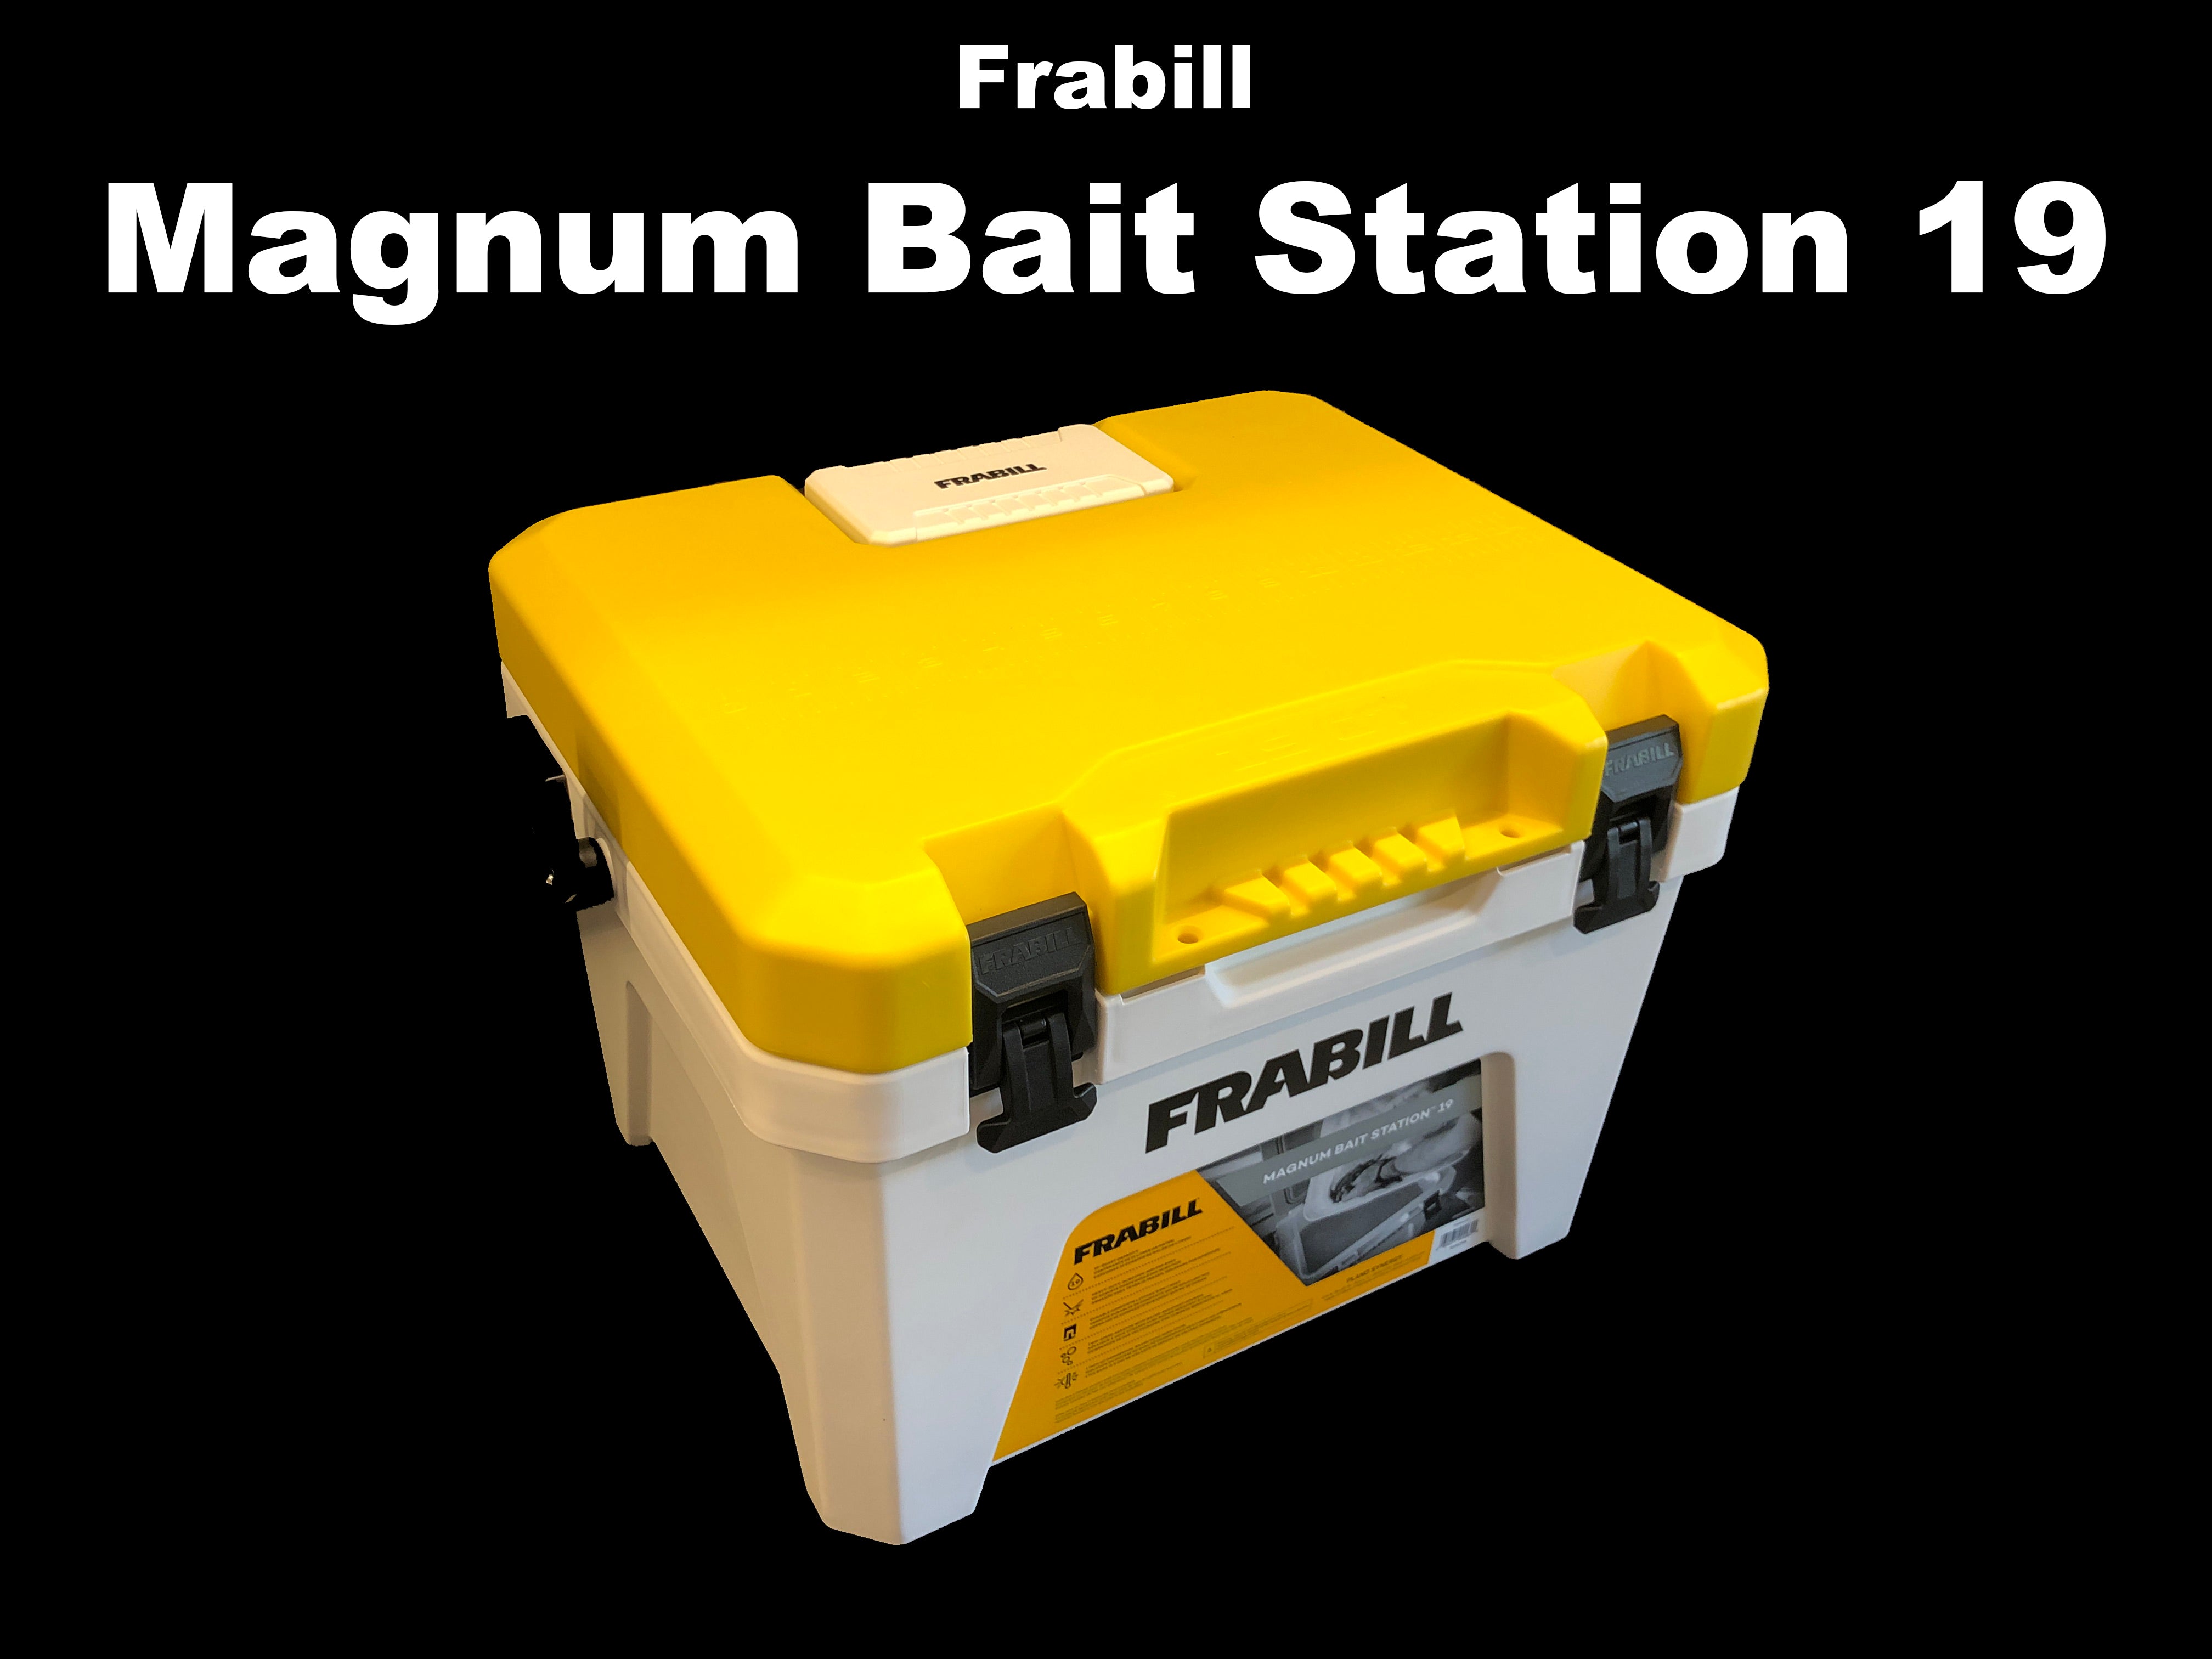 Best Cooler and Bait Storage: Frabill Magnum Bait Station 